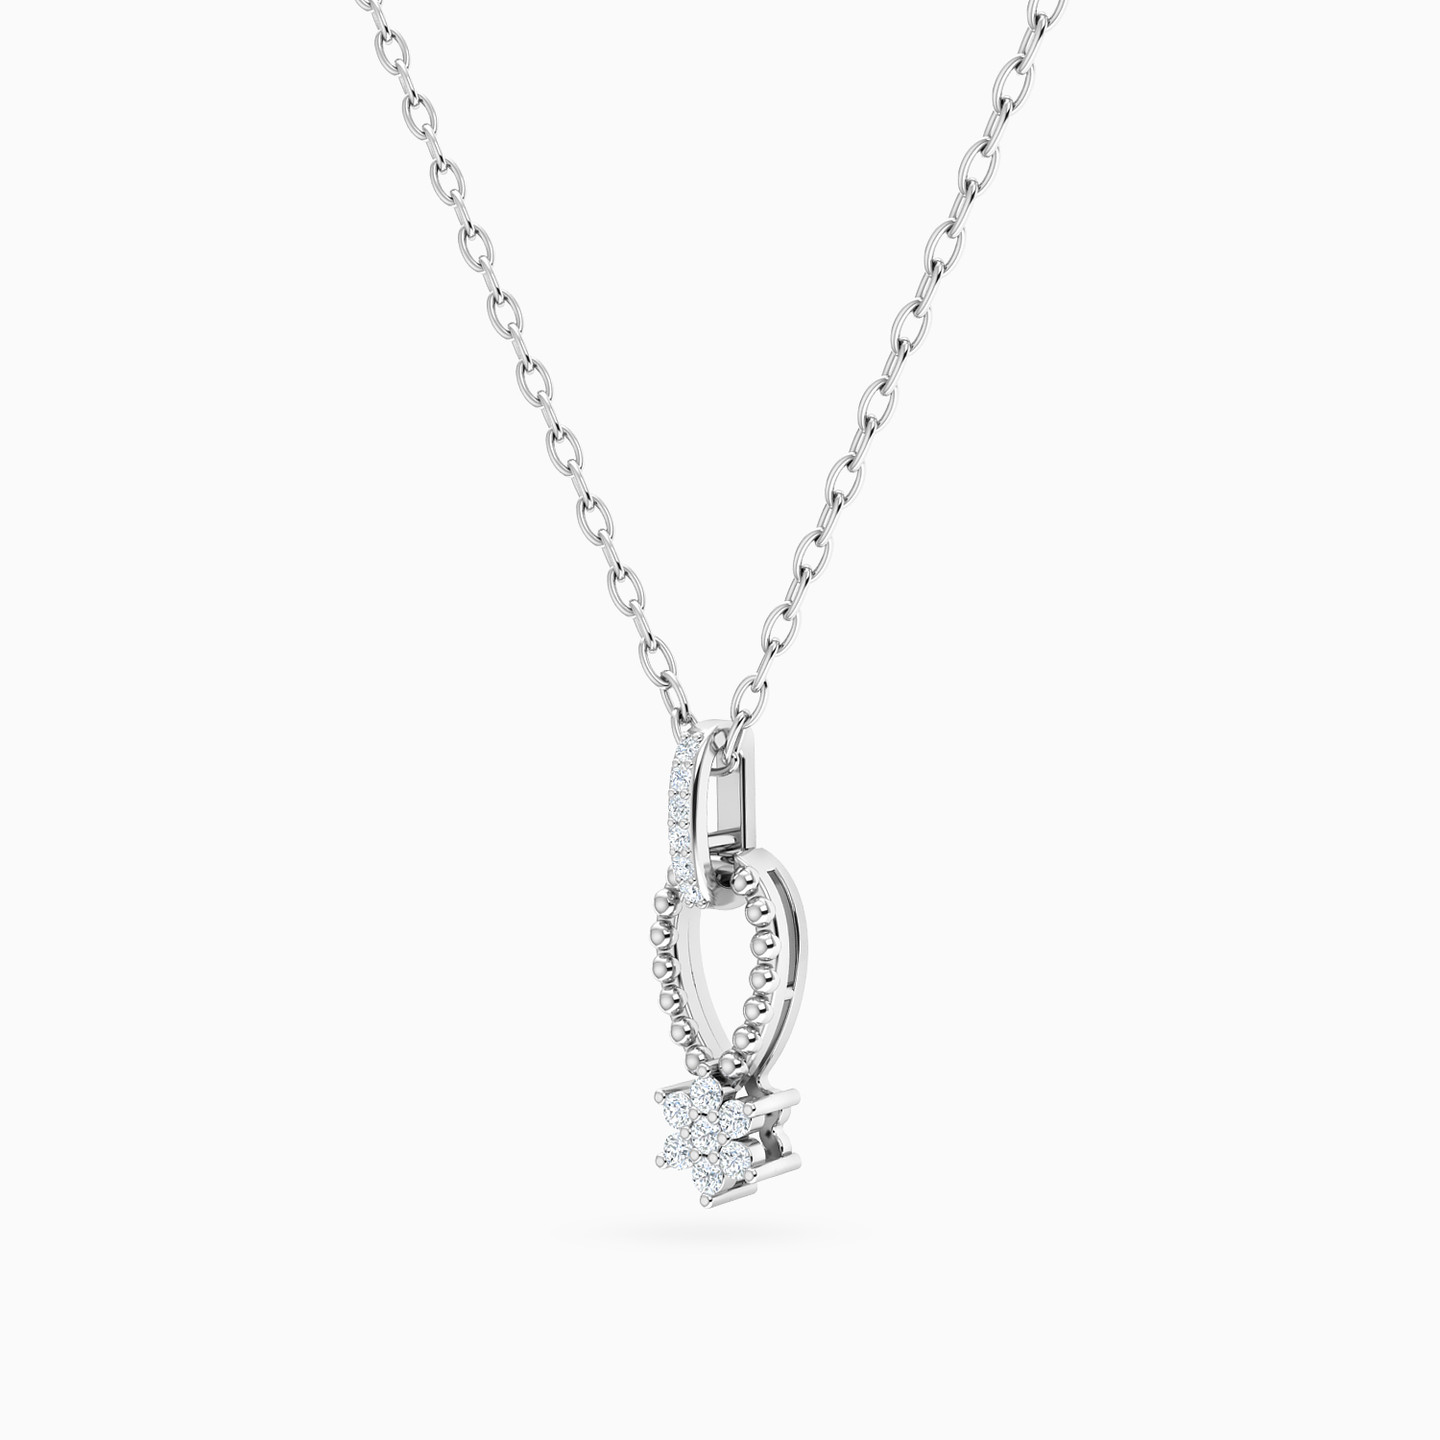 18K Gold Diamond Pendant Necklace - 2